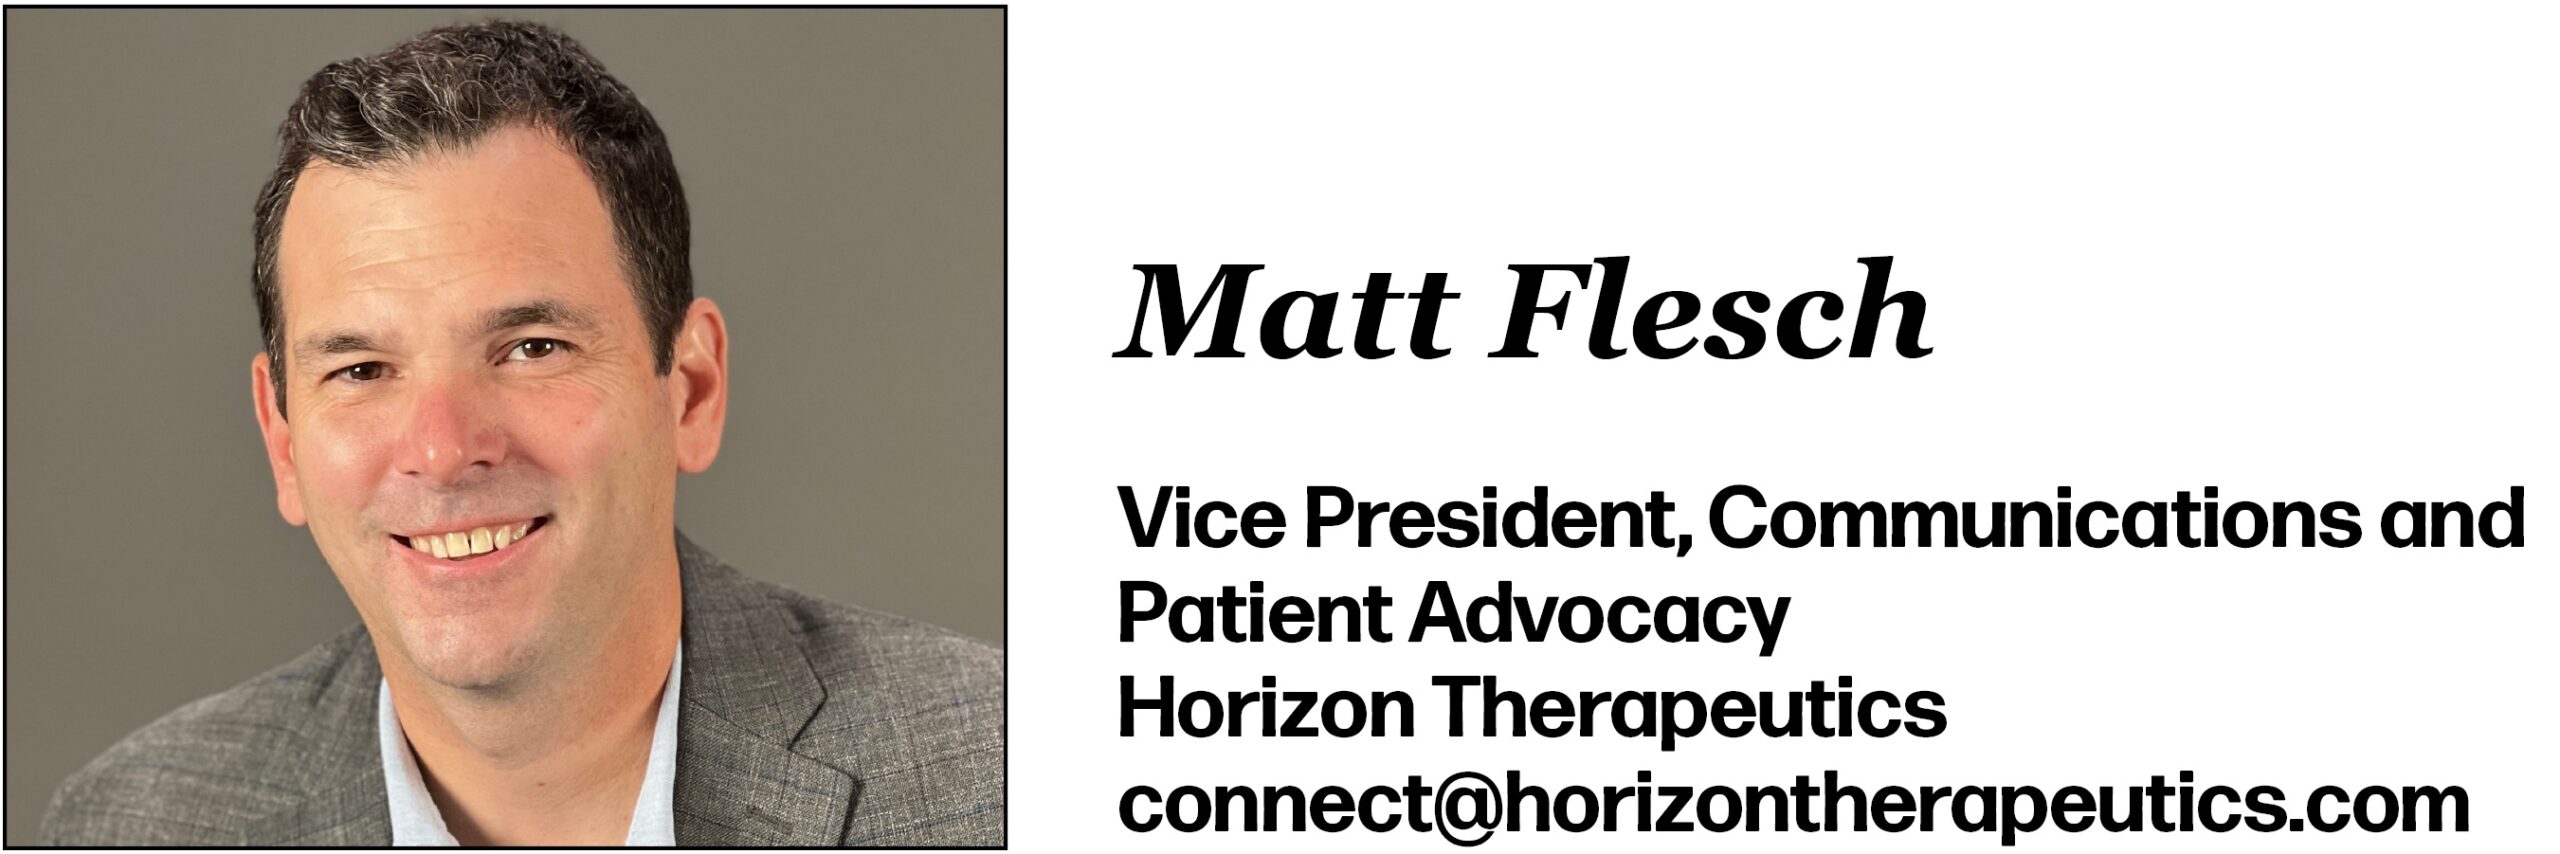 Matt Flesch Vice President, Communications and Patient Advocacy Horizon Therapeutics connect@horizontherapeutics.com